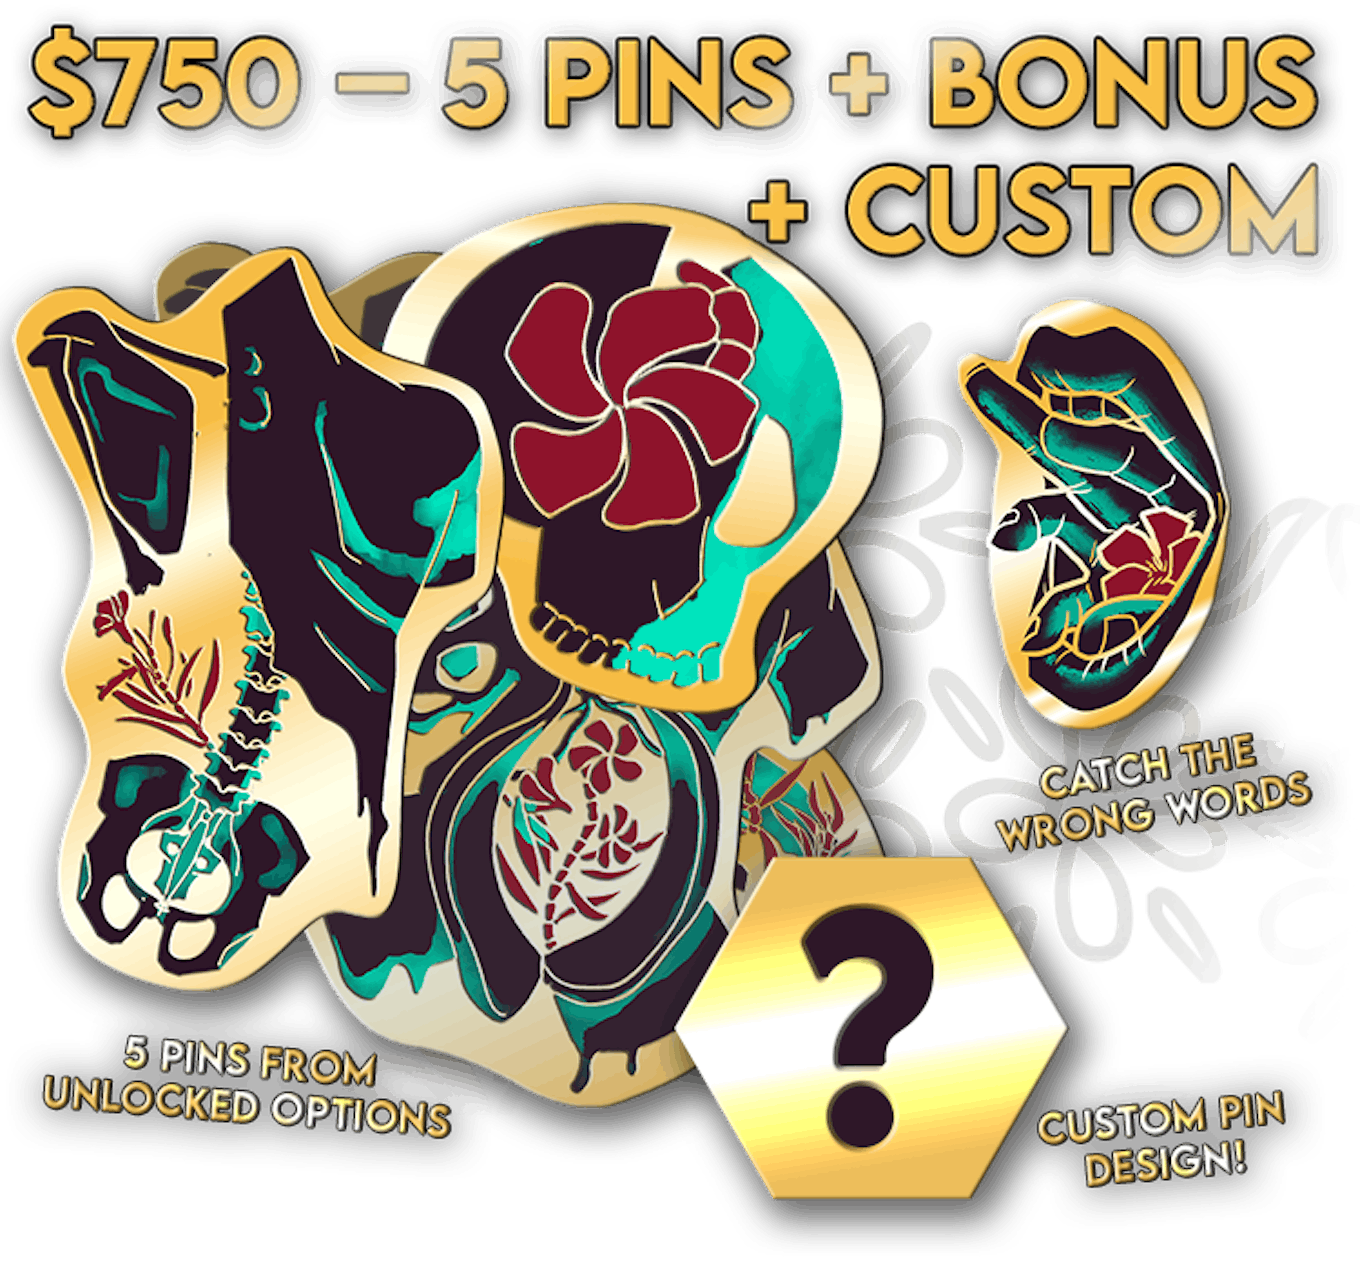 $750 - 5 Pins + Bonus + Custom: 5 pins from unlocked options, Catch The Wrong Words, Custom Pin Design!